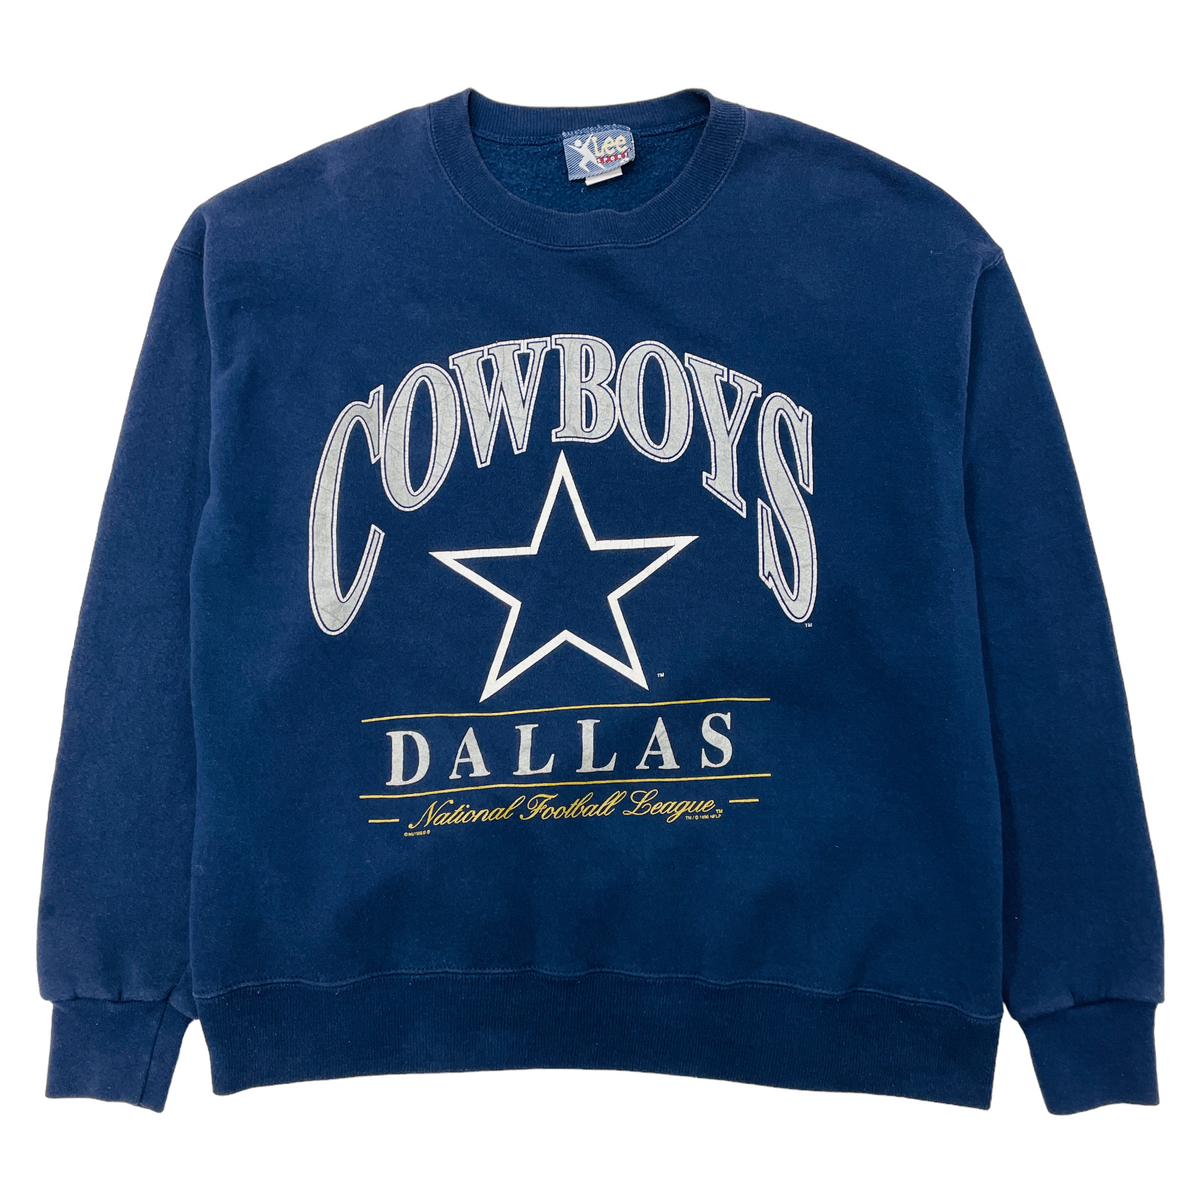 Dallas Cowboys NFL Sweatshirt - Large – The Vintage Store